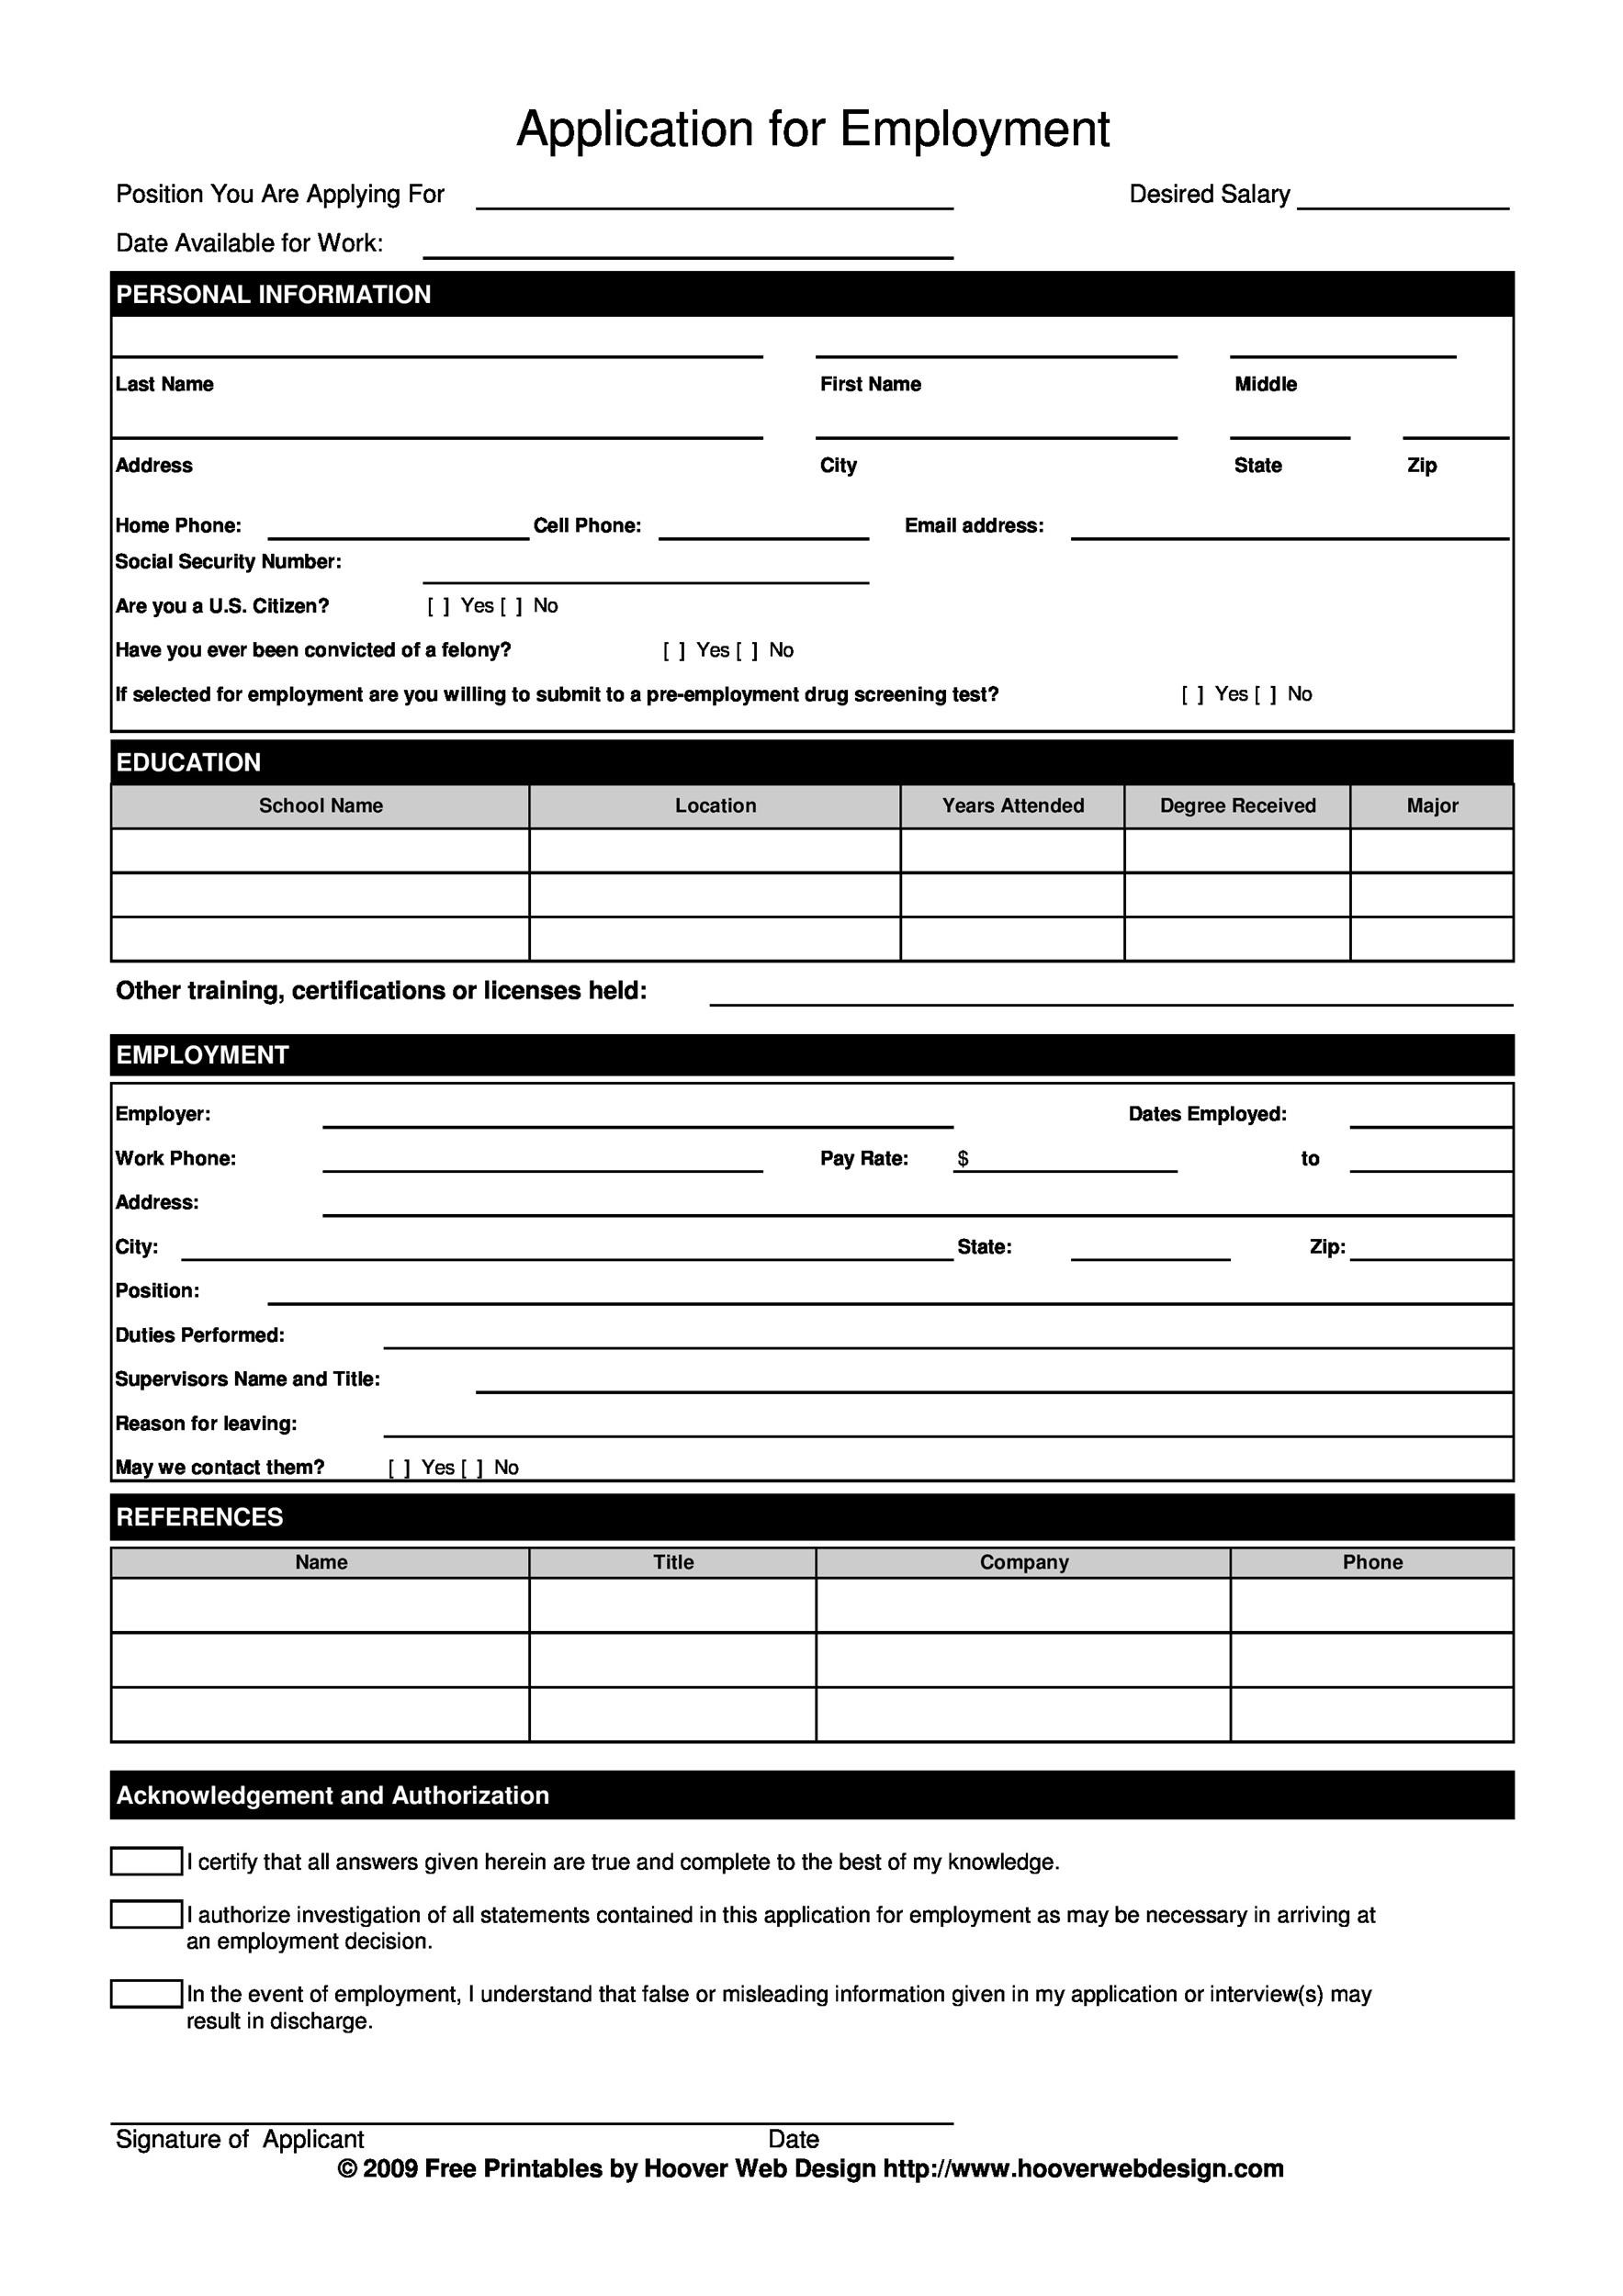 Application form template free download apostila ingles basico pdf download